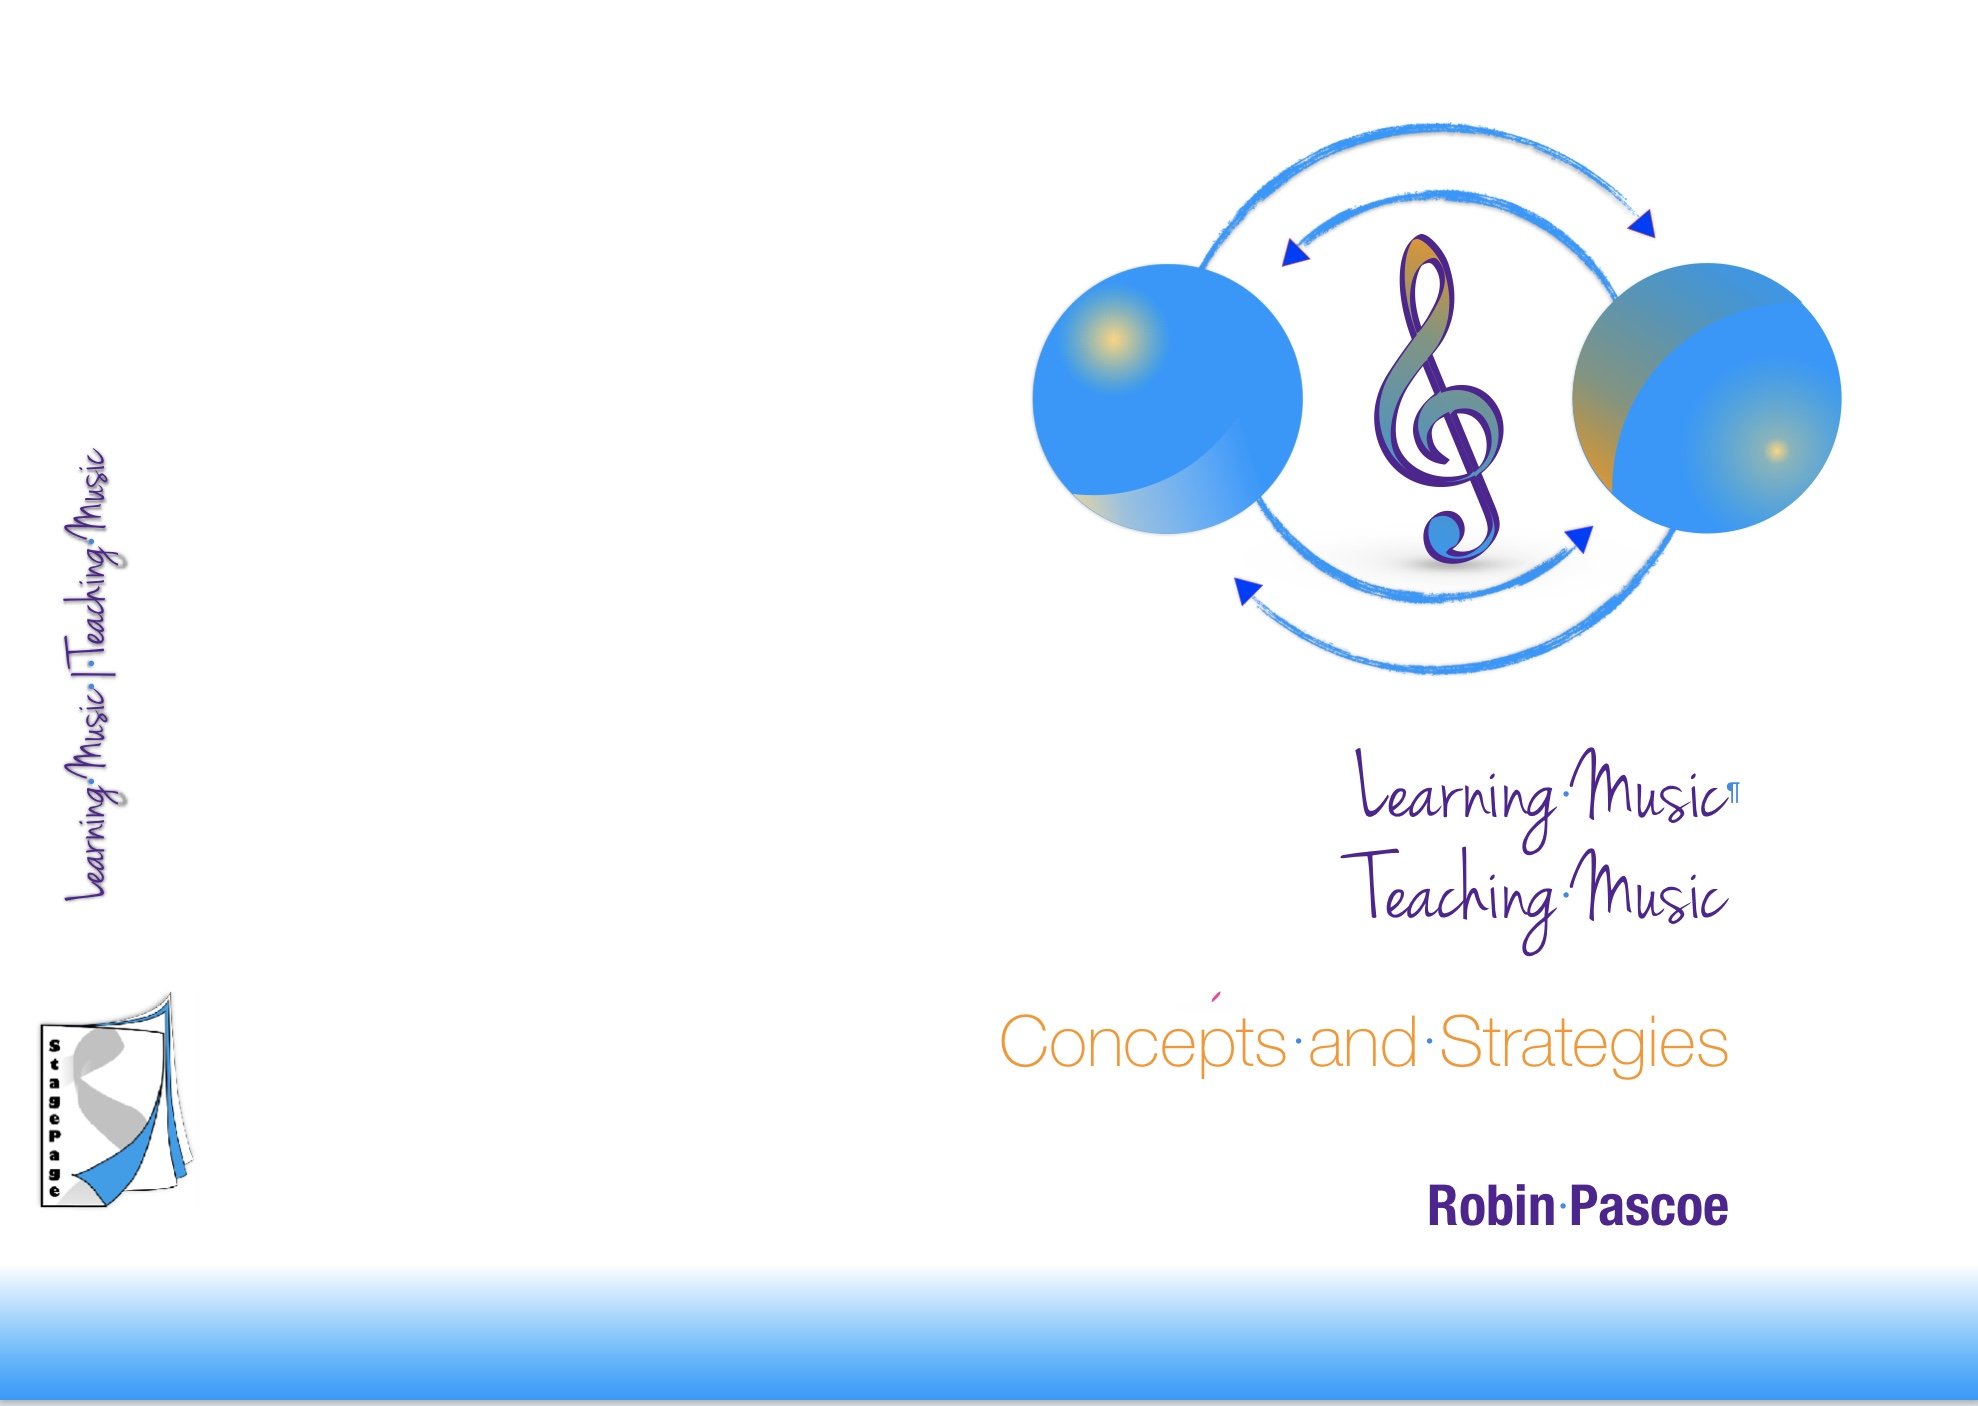 Learning Music Teaching Music Cover 2018.jpeg